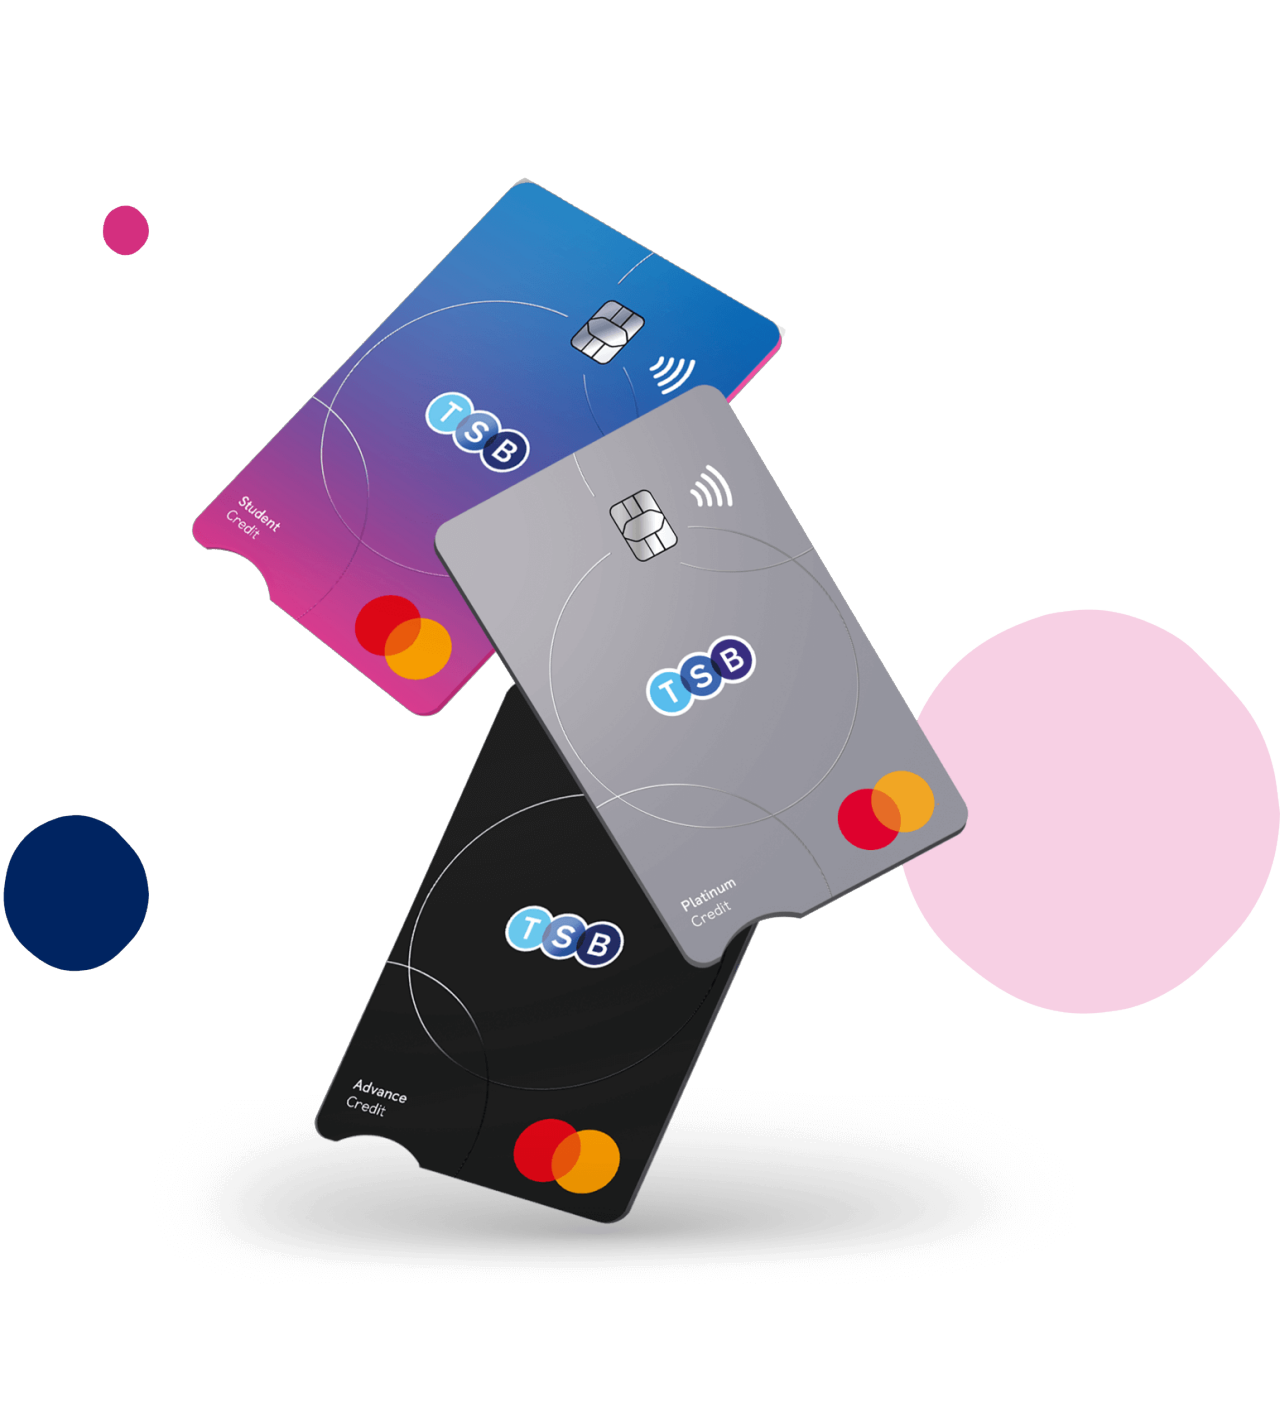 Three illustrated TSB credit cards